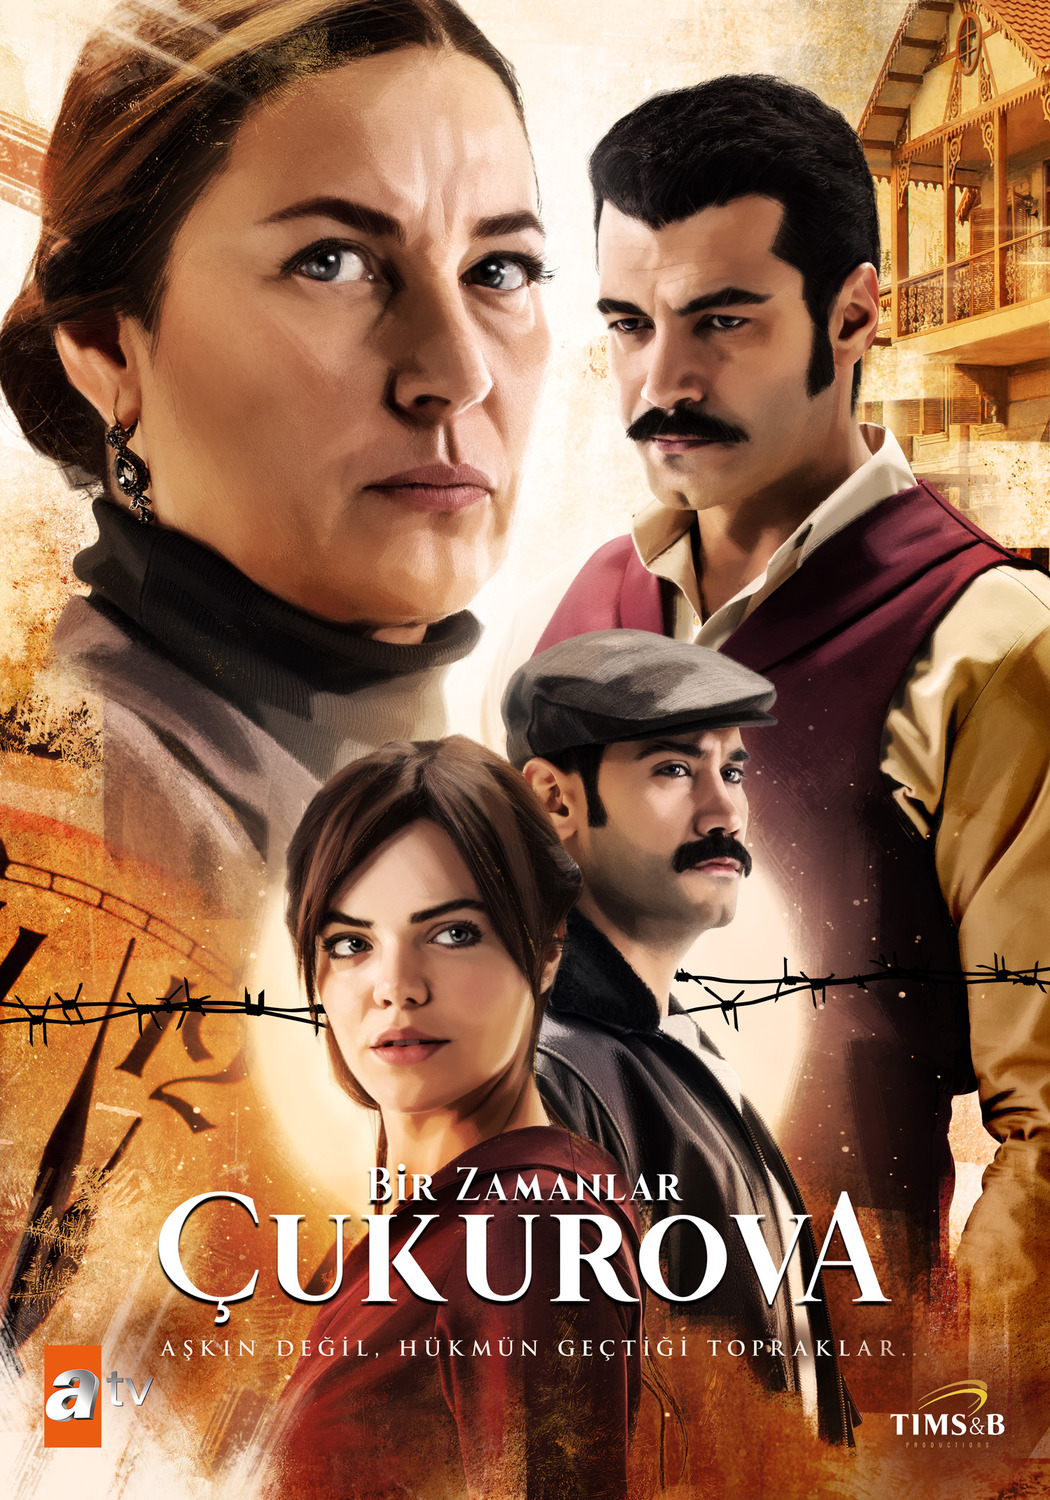 Extra Large TV Poster Image for Bir zamanlar Çukurova (#5 of 12)